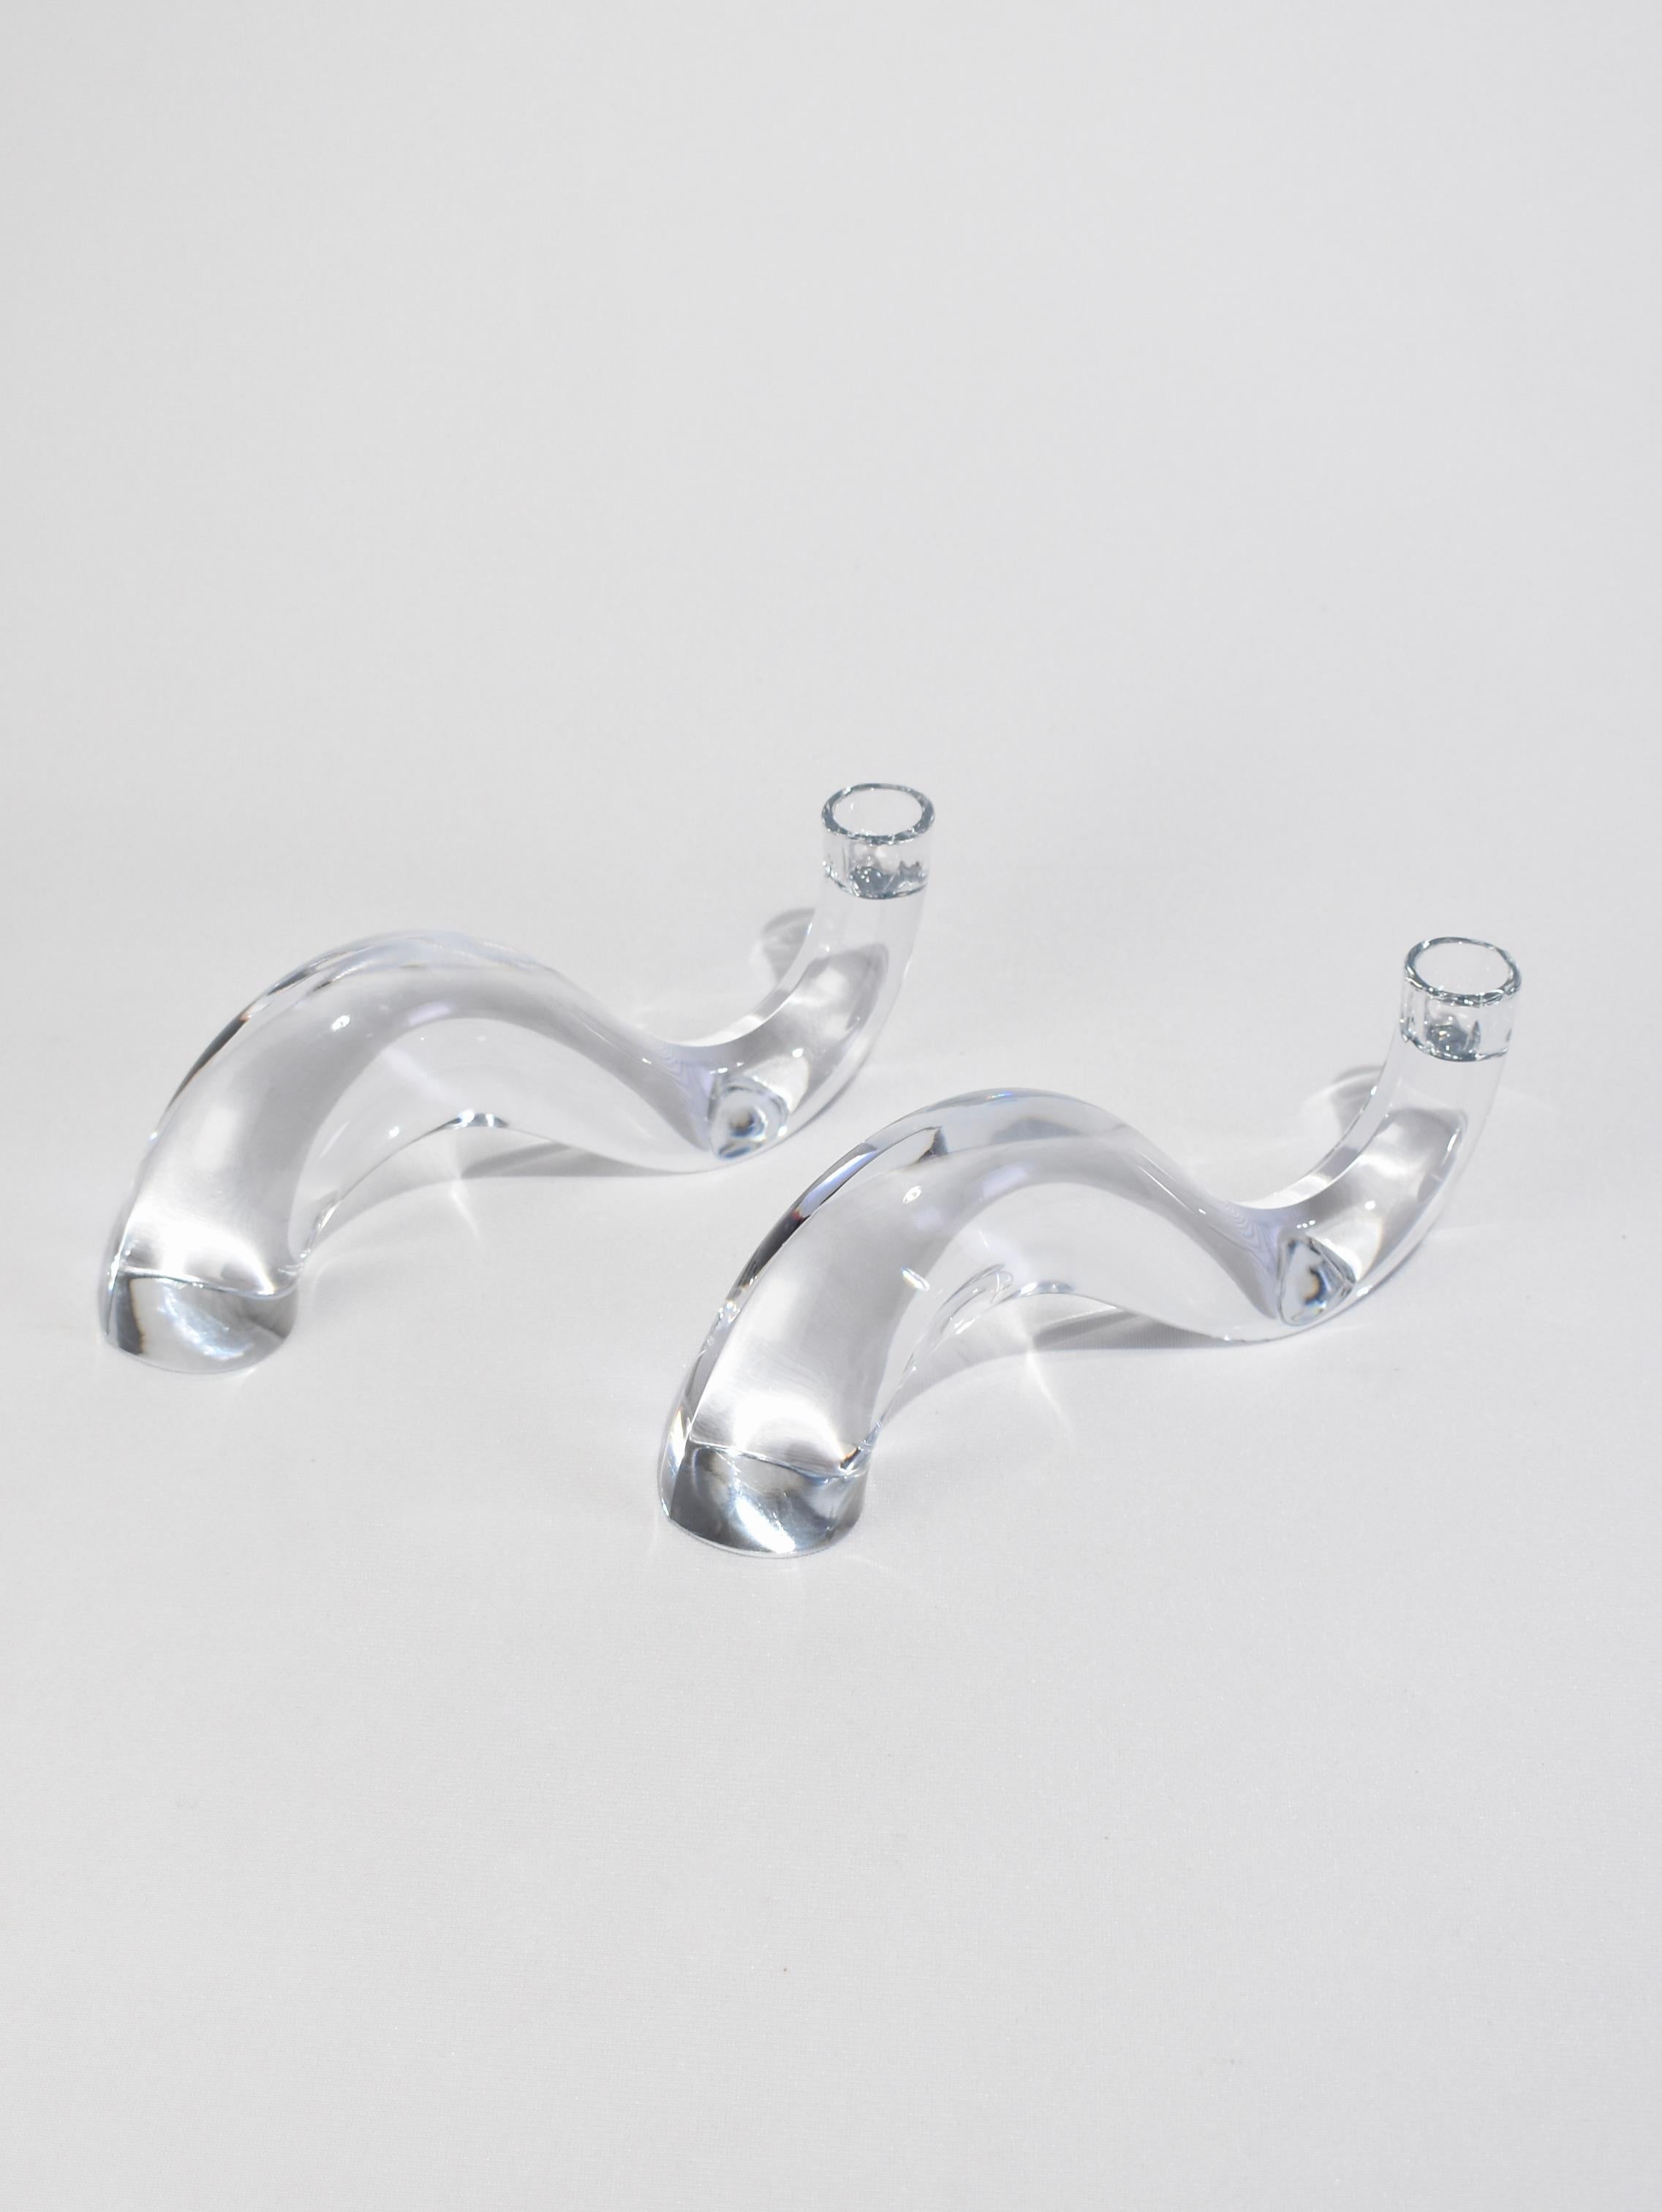 Wave Glass Candleholders 2